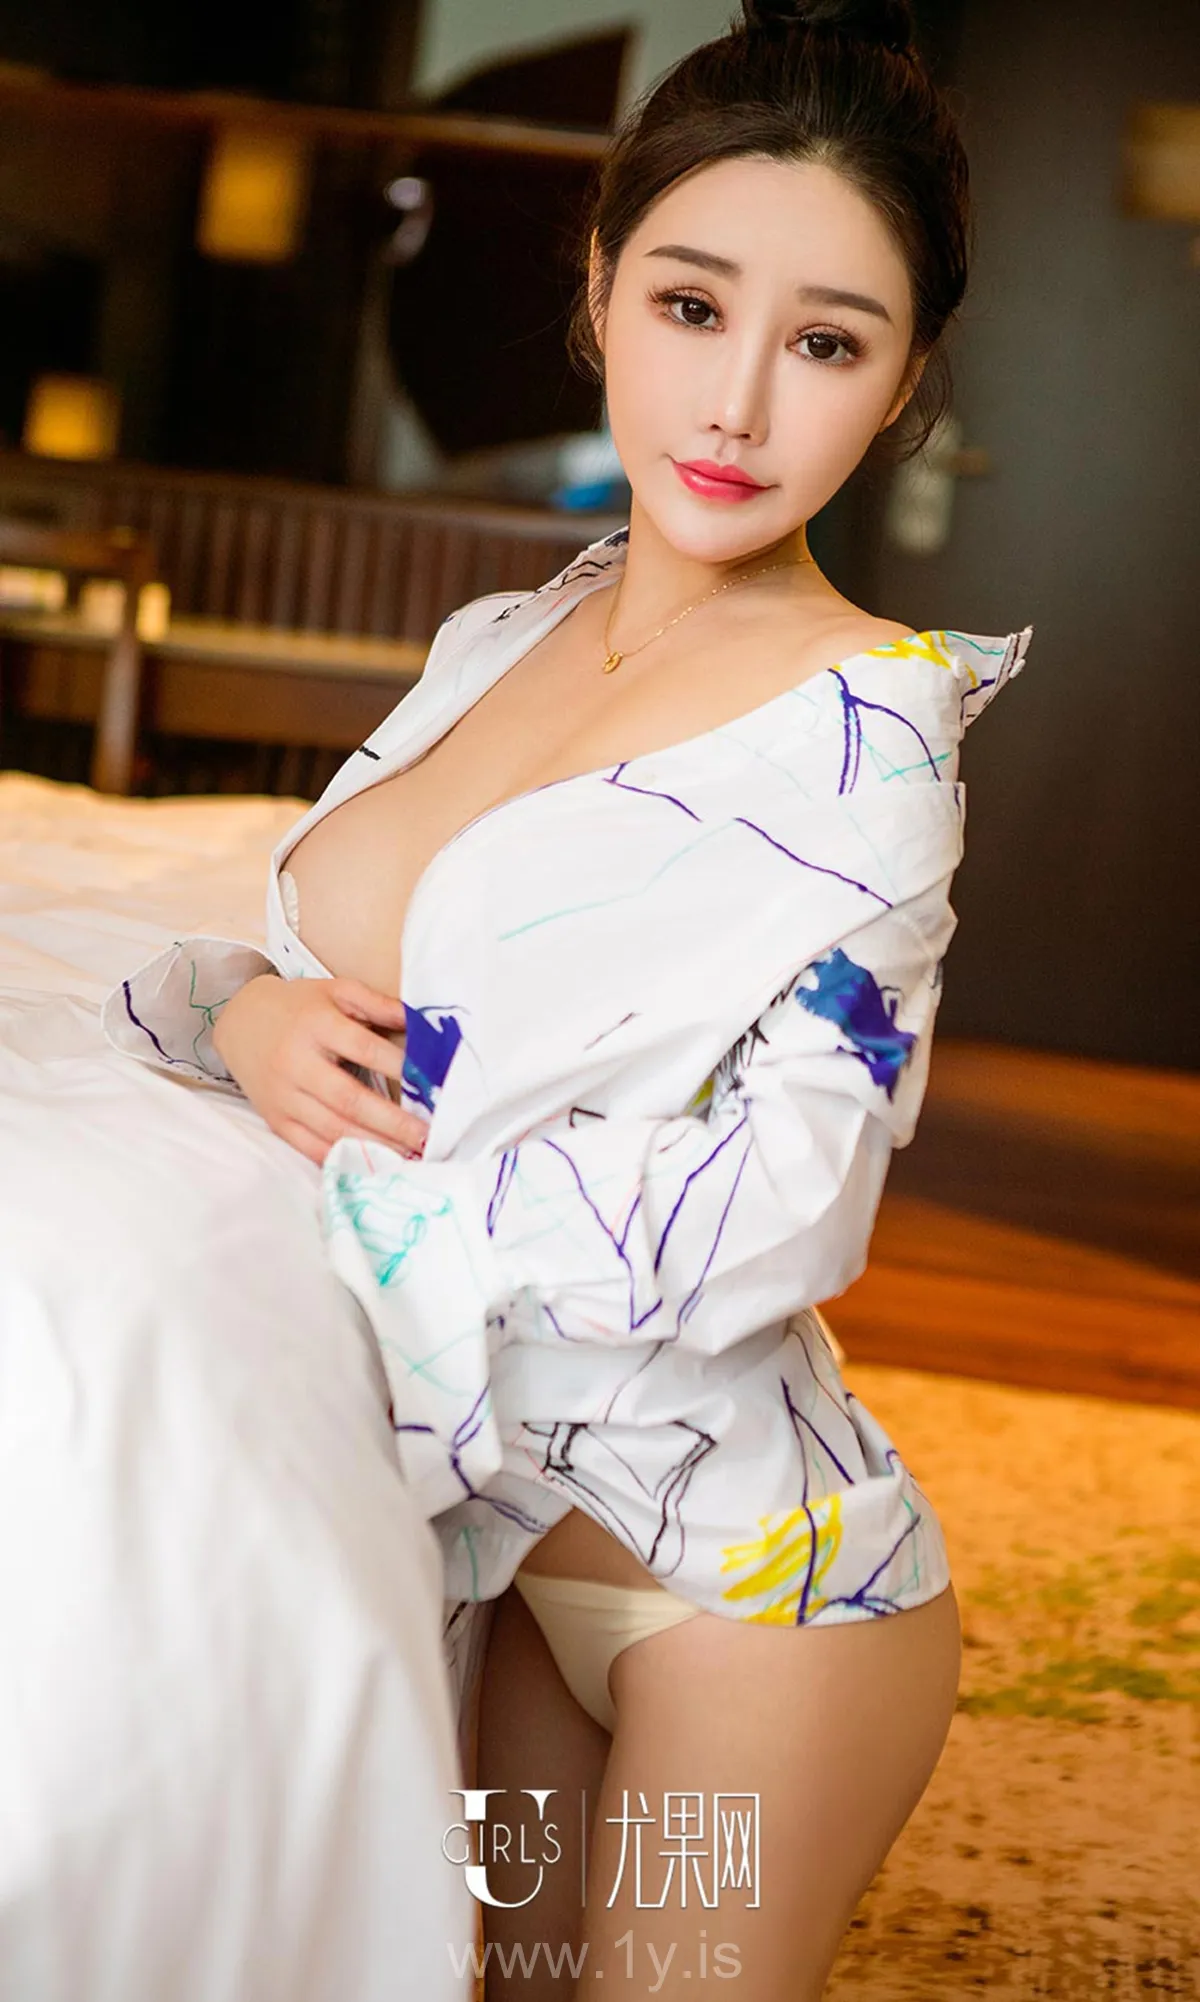 UGIRLS NO.642 Delightful & Sexy Chinese Hottie 赫连露娜